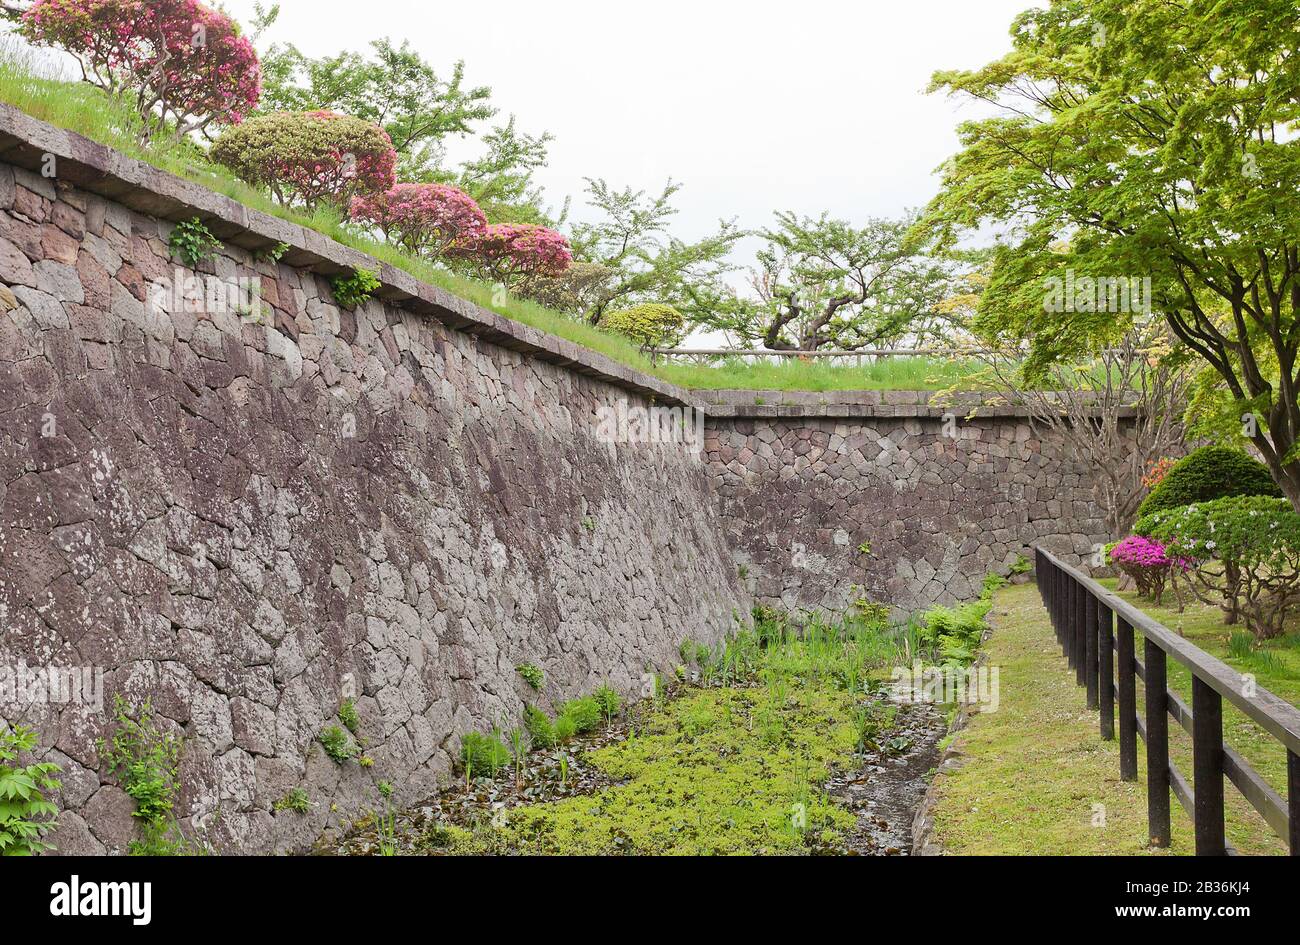 Stone walls (ishigaki) and moat of Goryokaku Fort in Hakodate, Hokkaido Island, Japan. Fort was erected in 1855, destroyed in 1869 Stock Photo